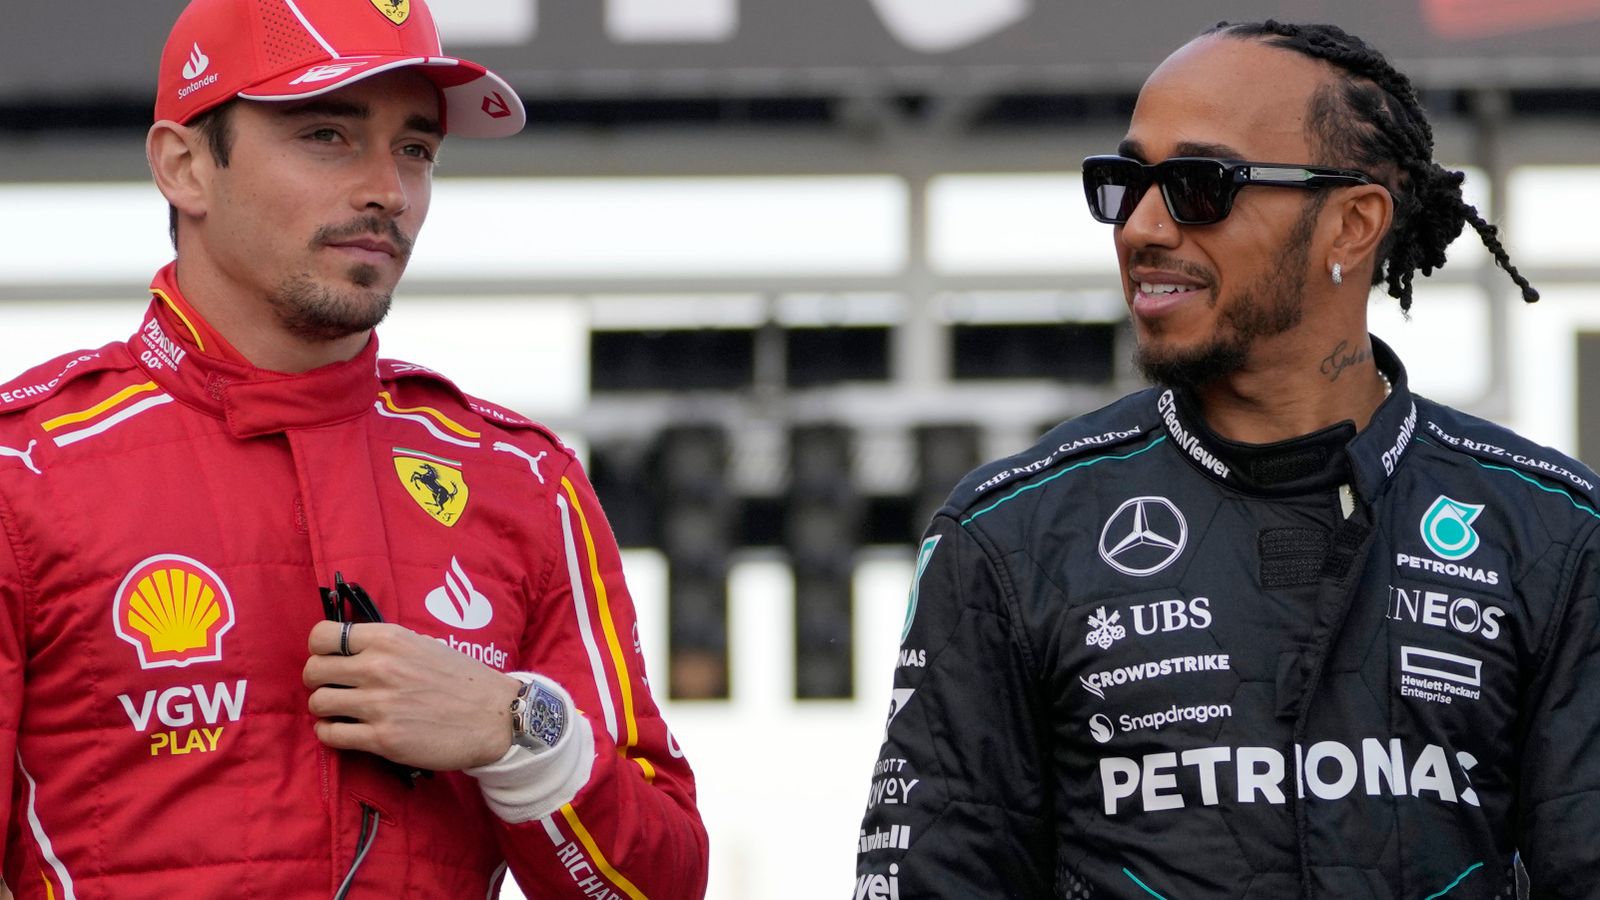 Hamilton comparison at Ferrari will be 'big moment' - Leclerc